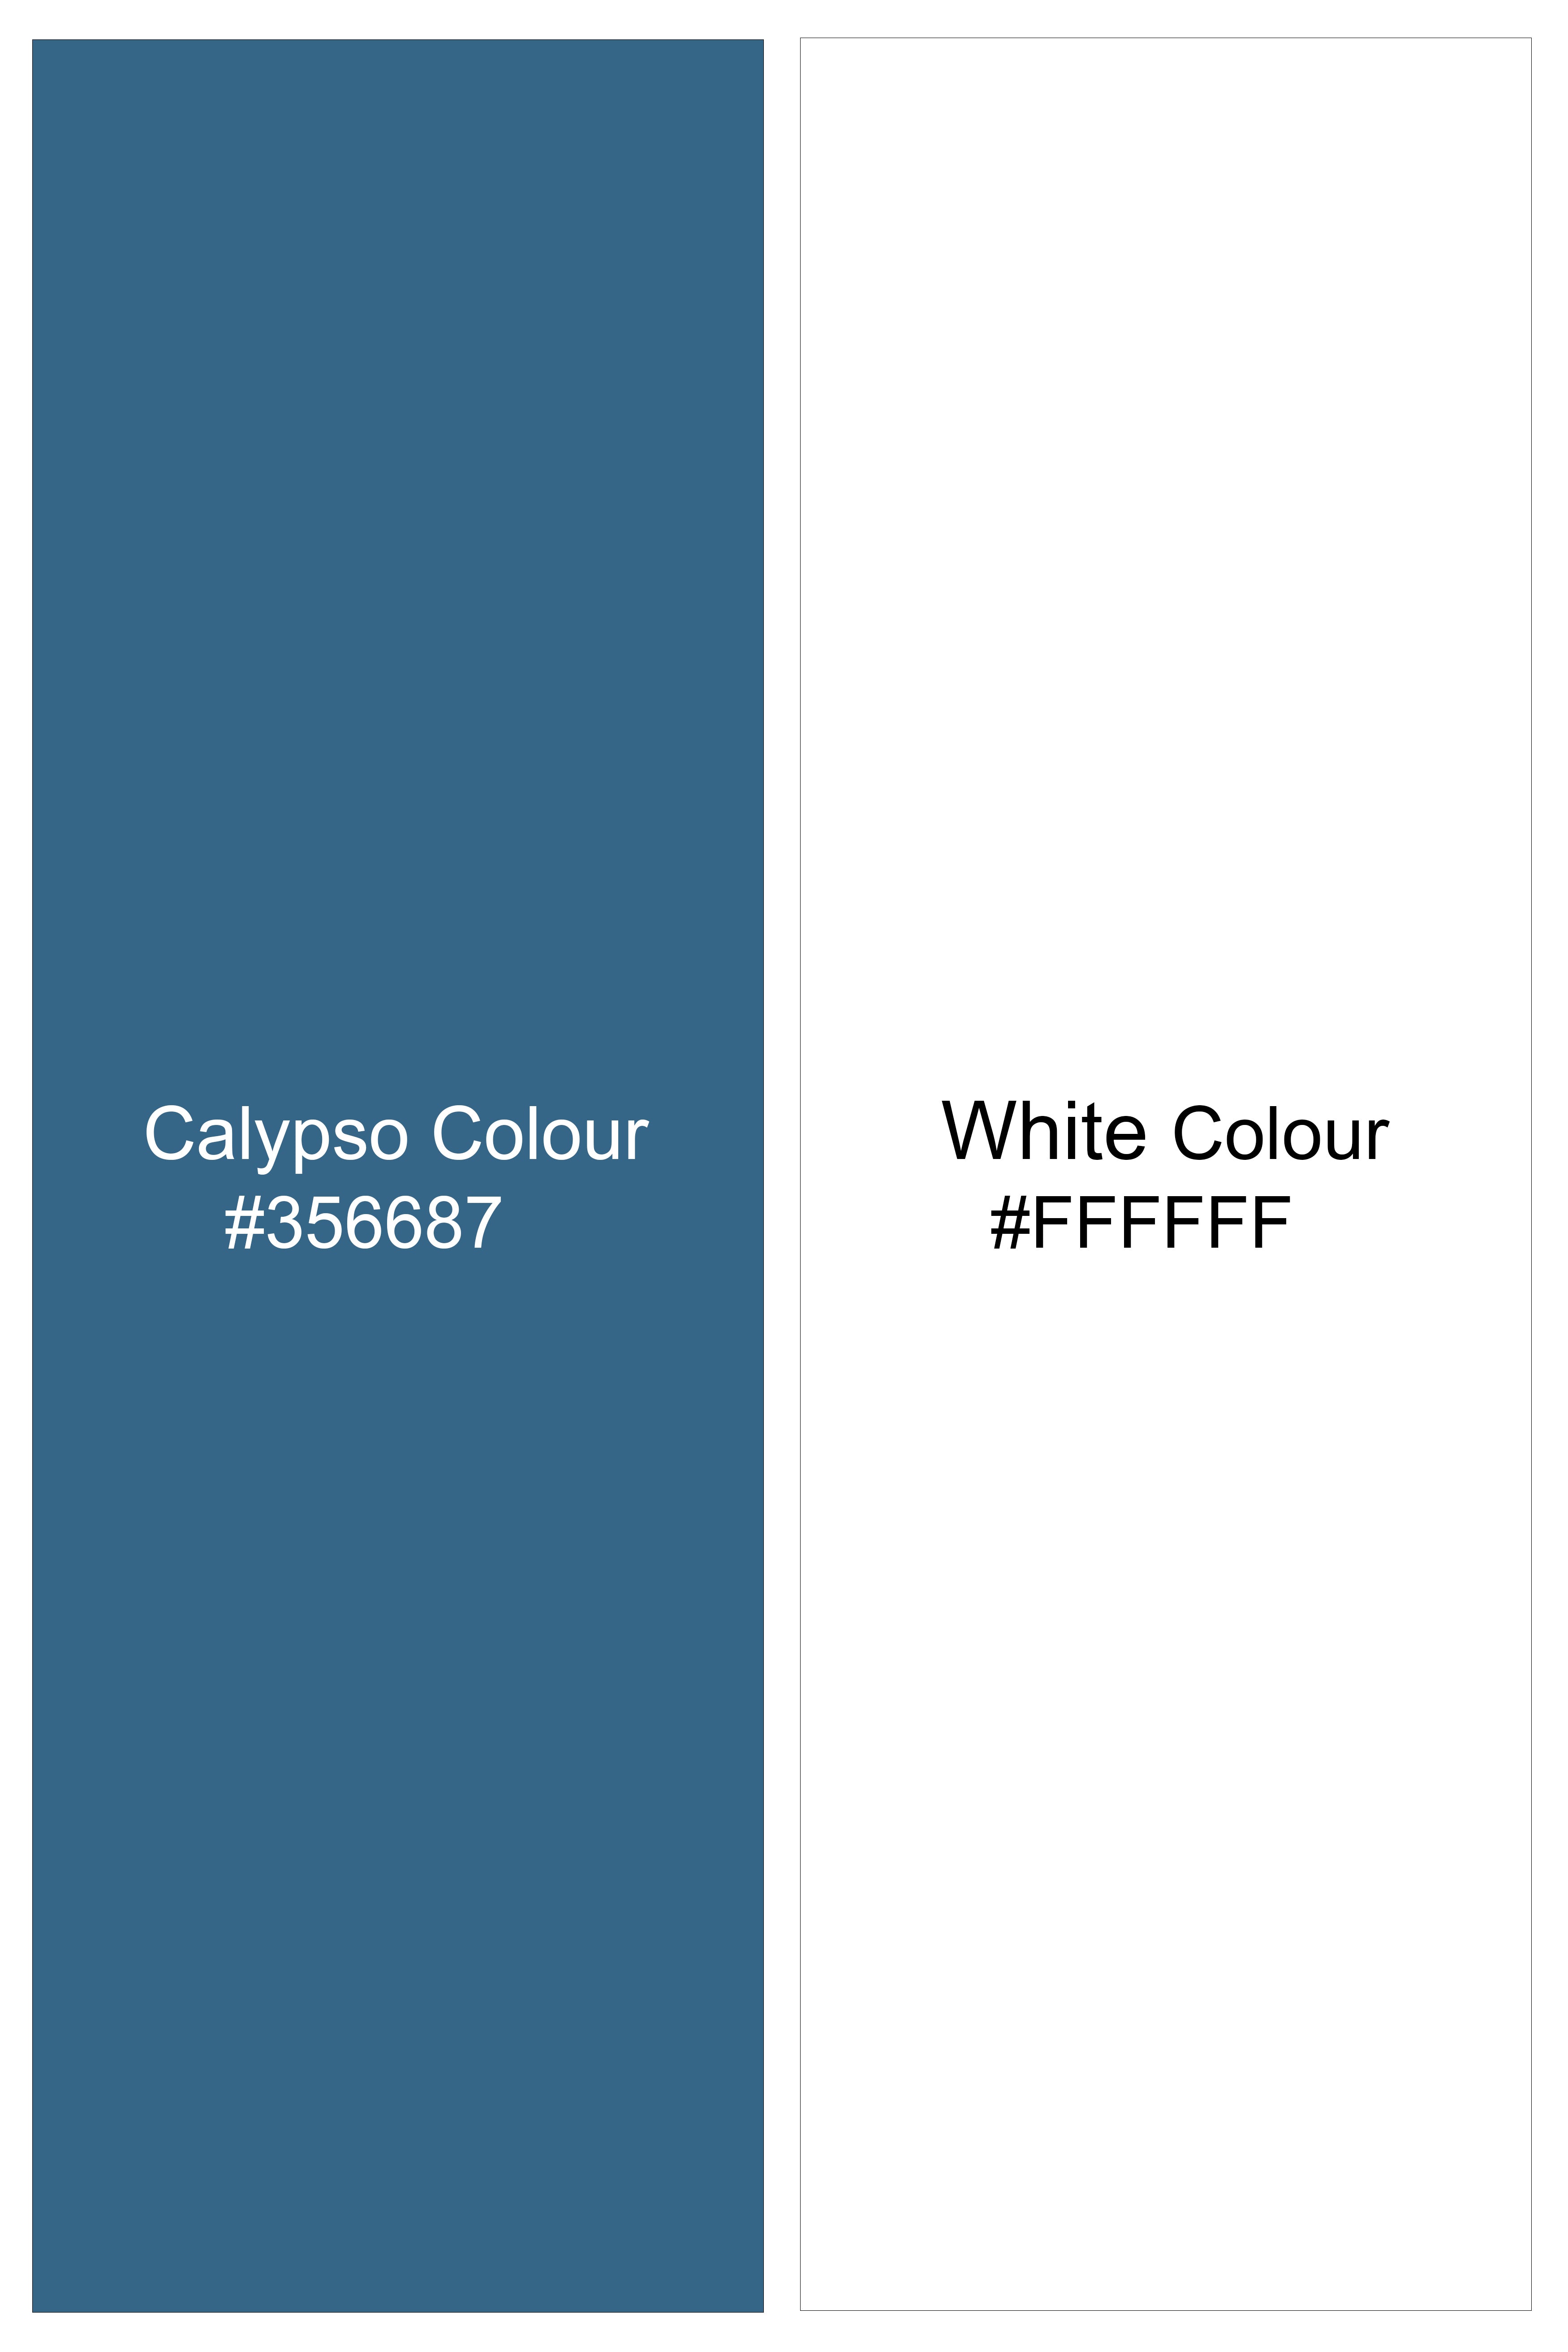 Calypso Blue with White Coconut Tree Printed Poplin Giza Cotton Shirt